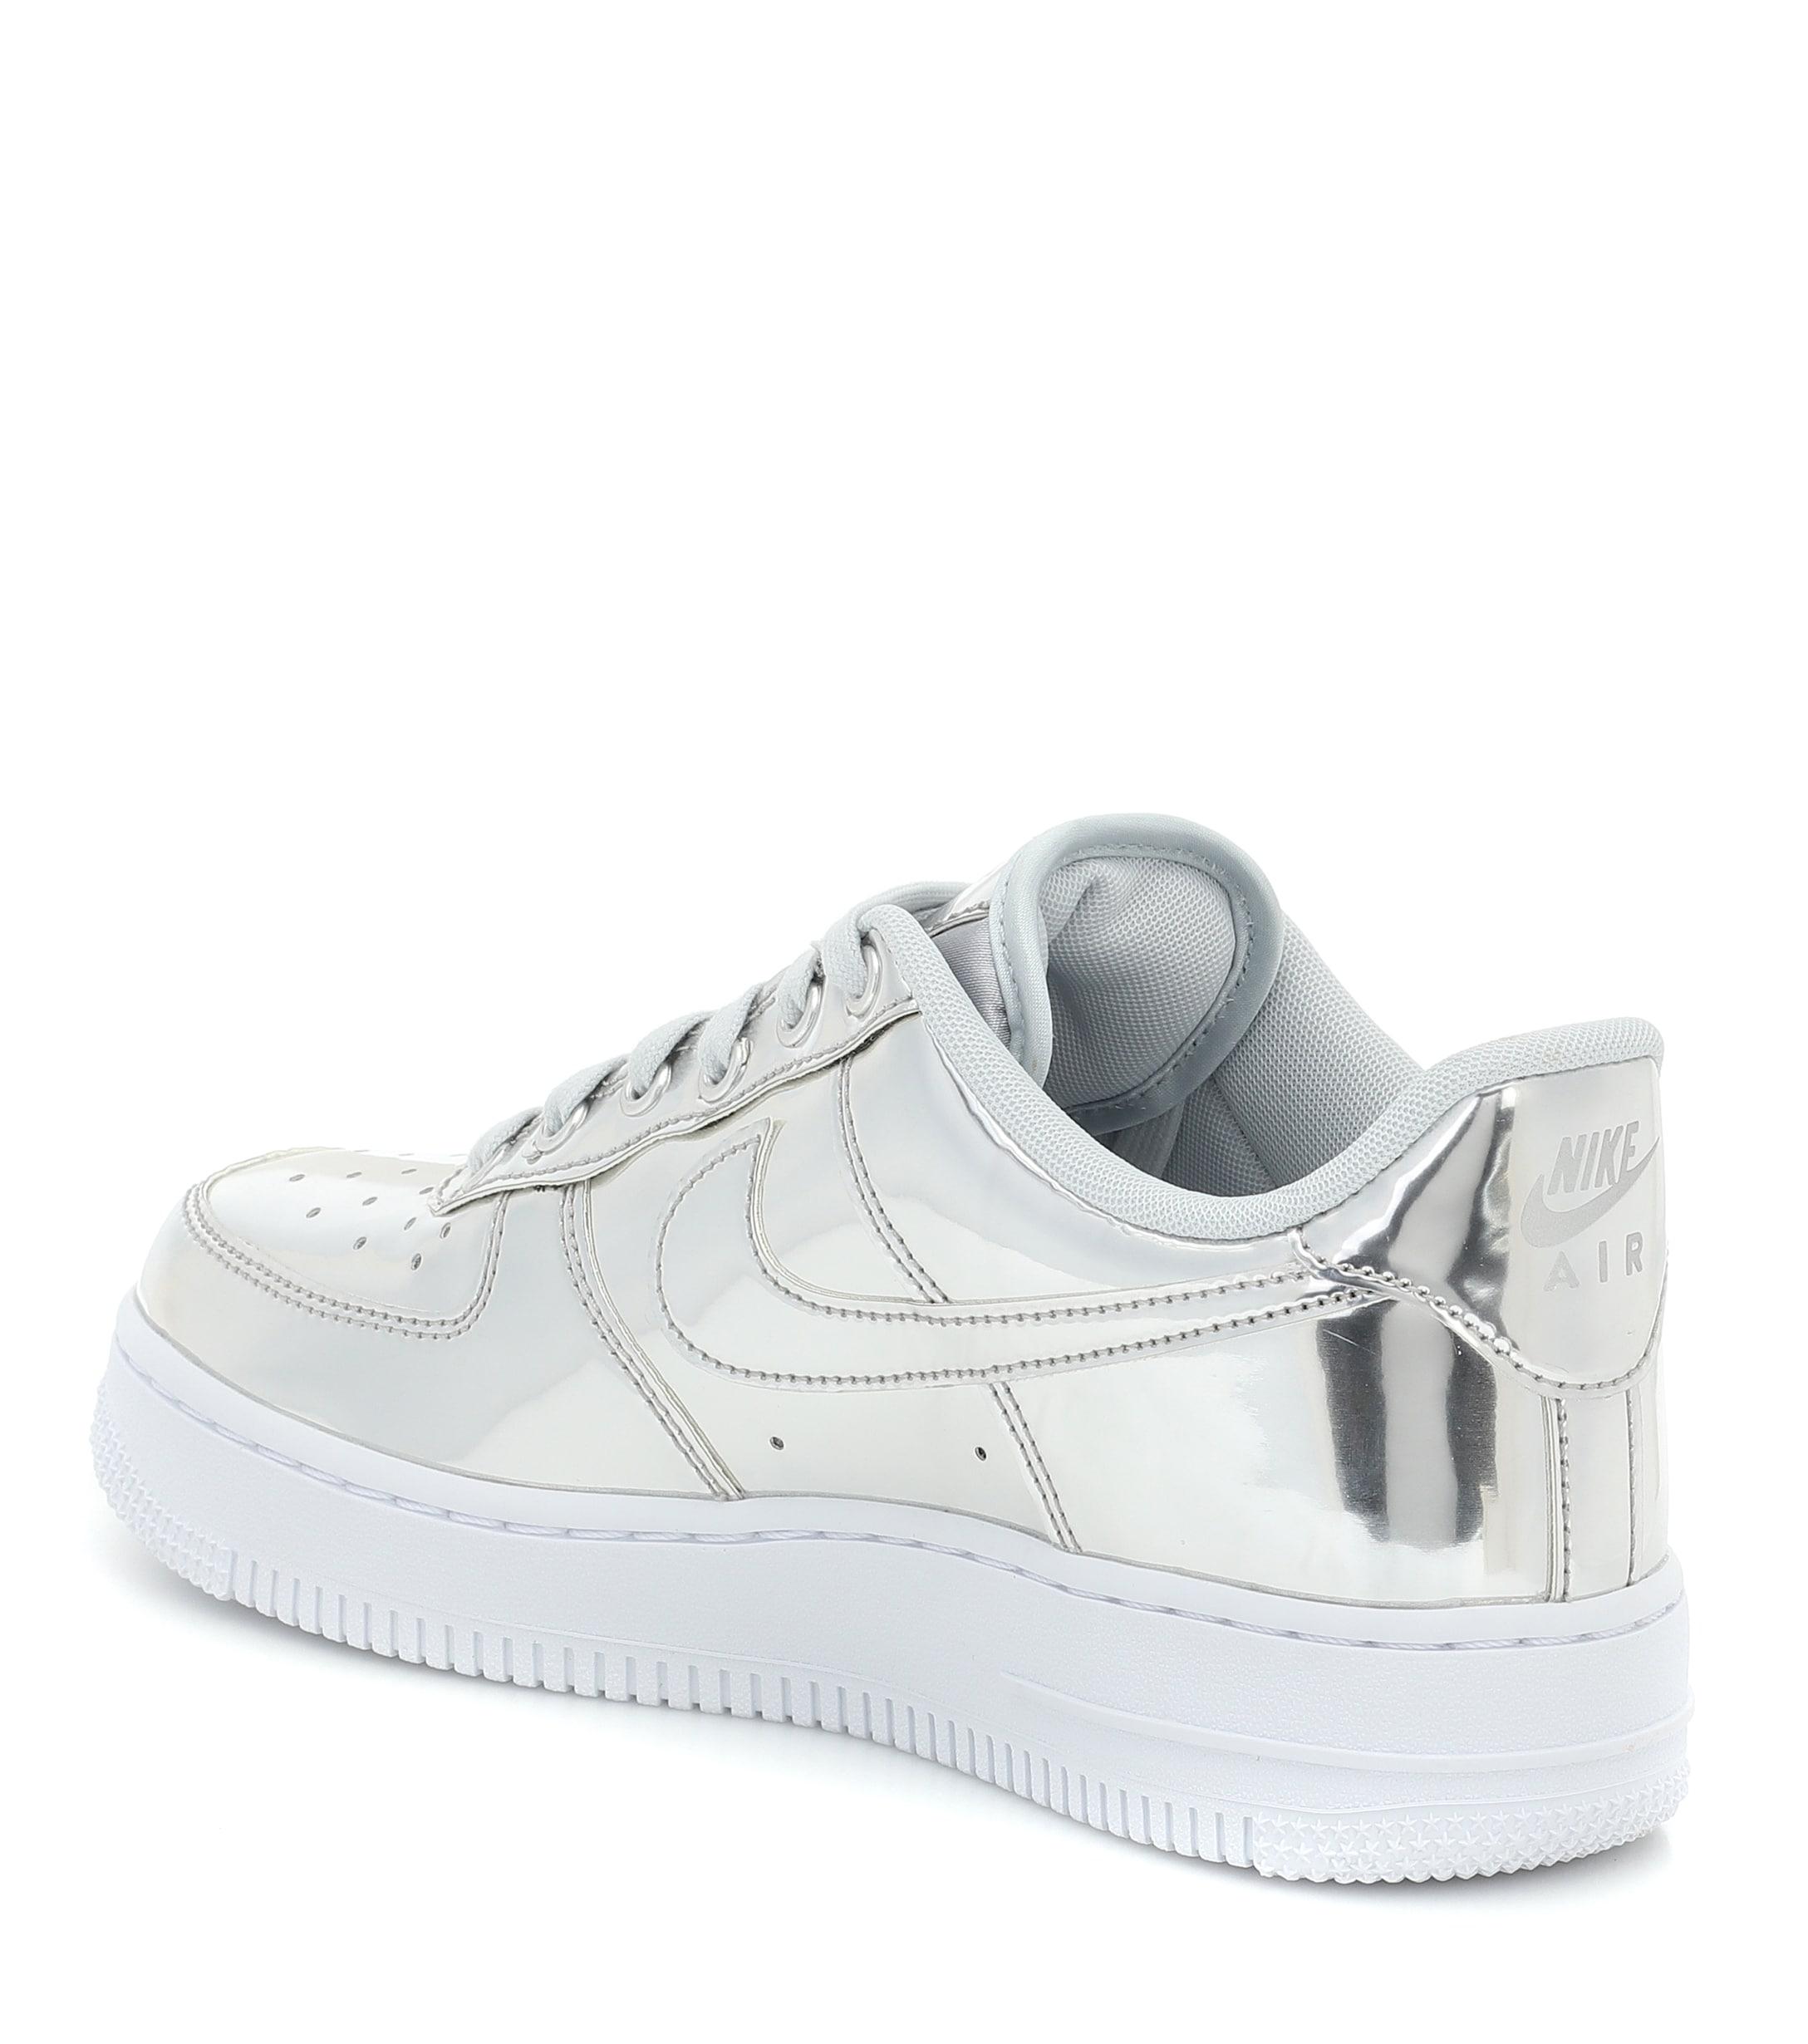 Nike Air Force 1 Sneakers in Silver (Metallic) - Save 66% | Lyst